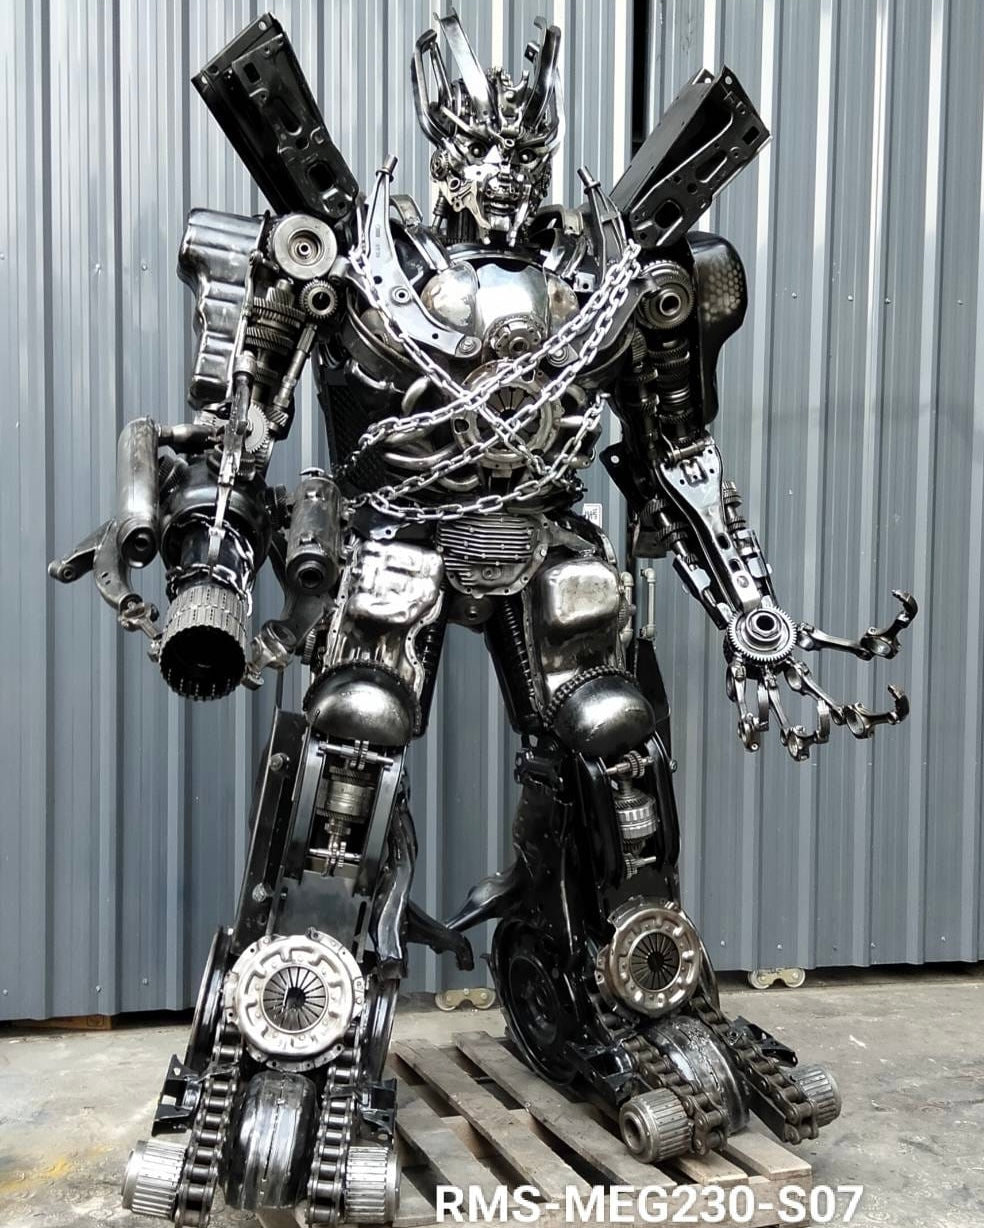 91" Megatron Inspired Recycled Metal Art Sculpture